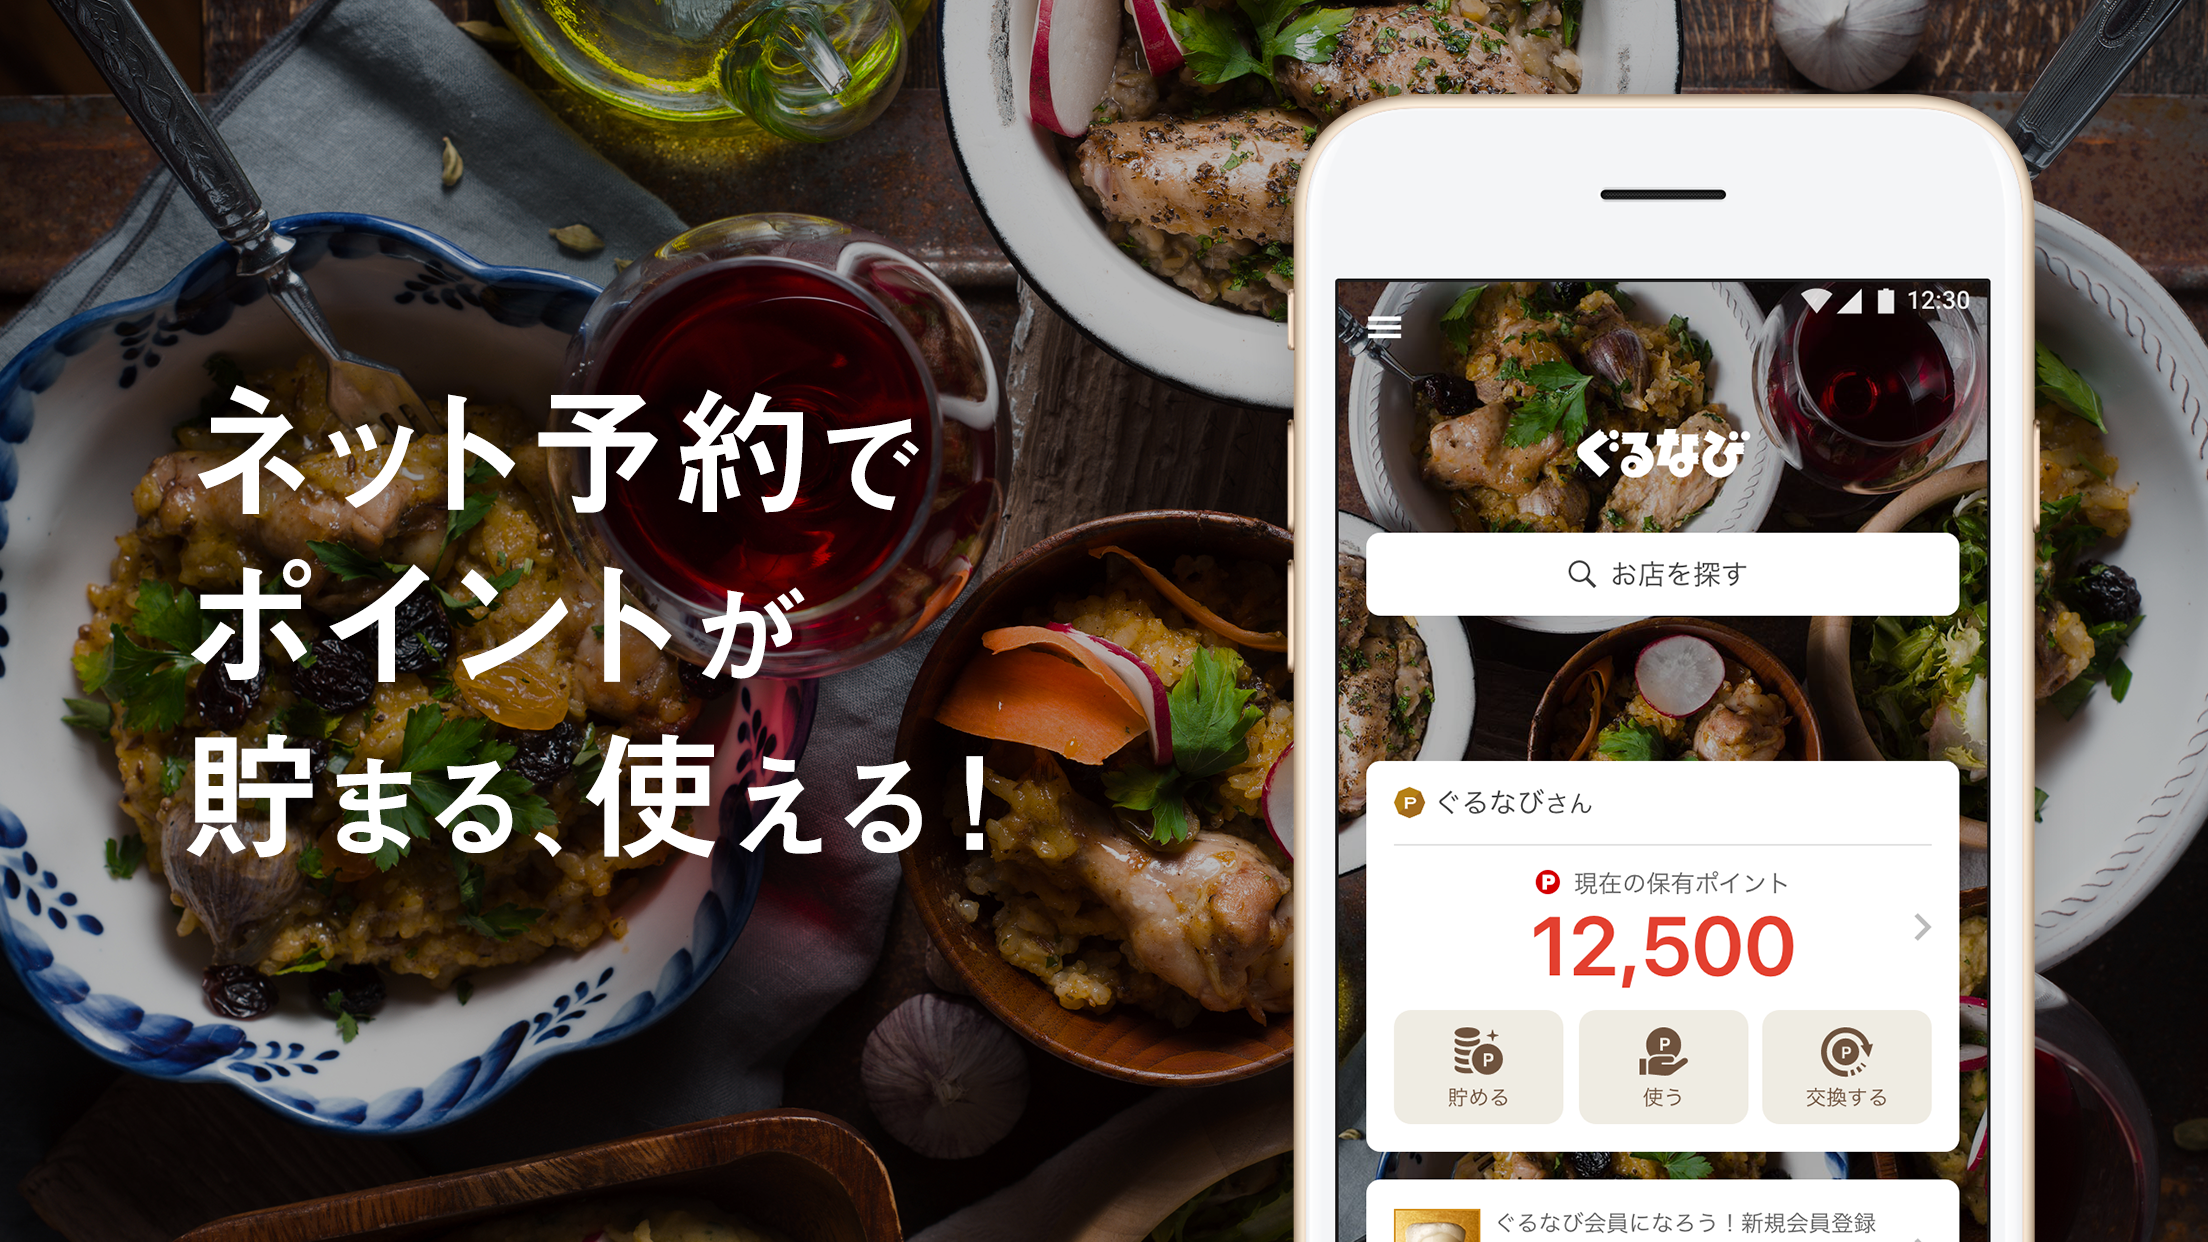 Android application Gourmet Navigator screenshort